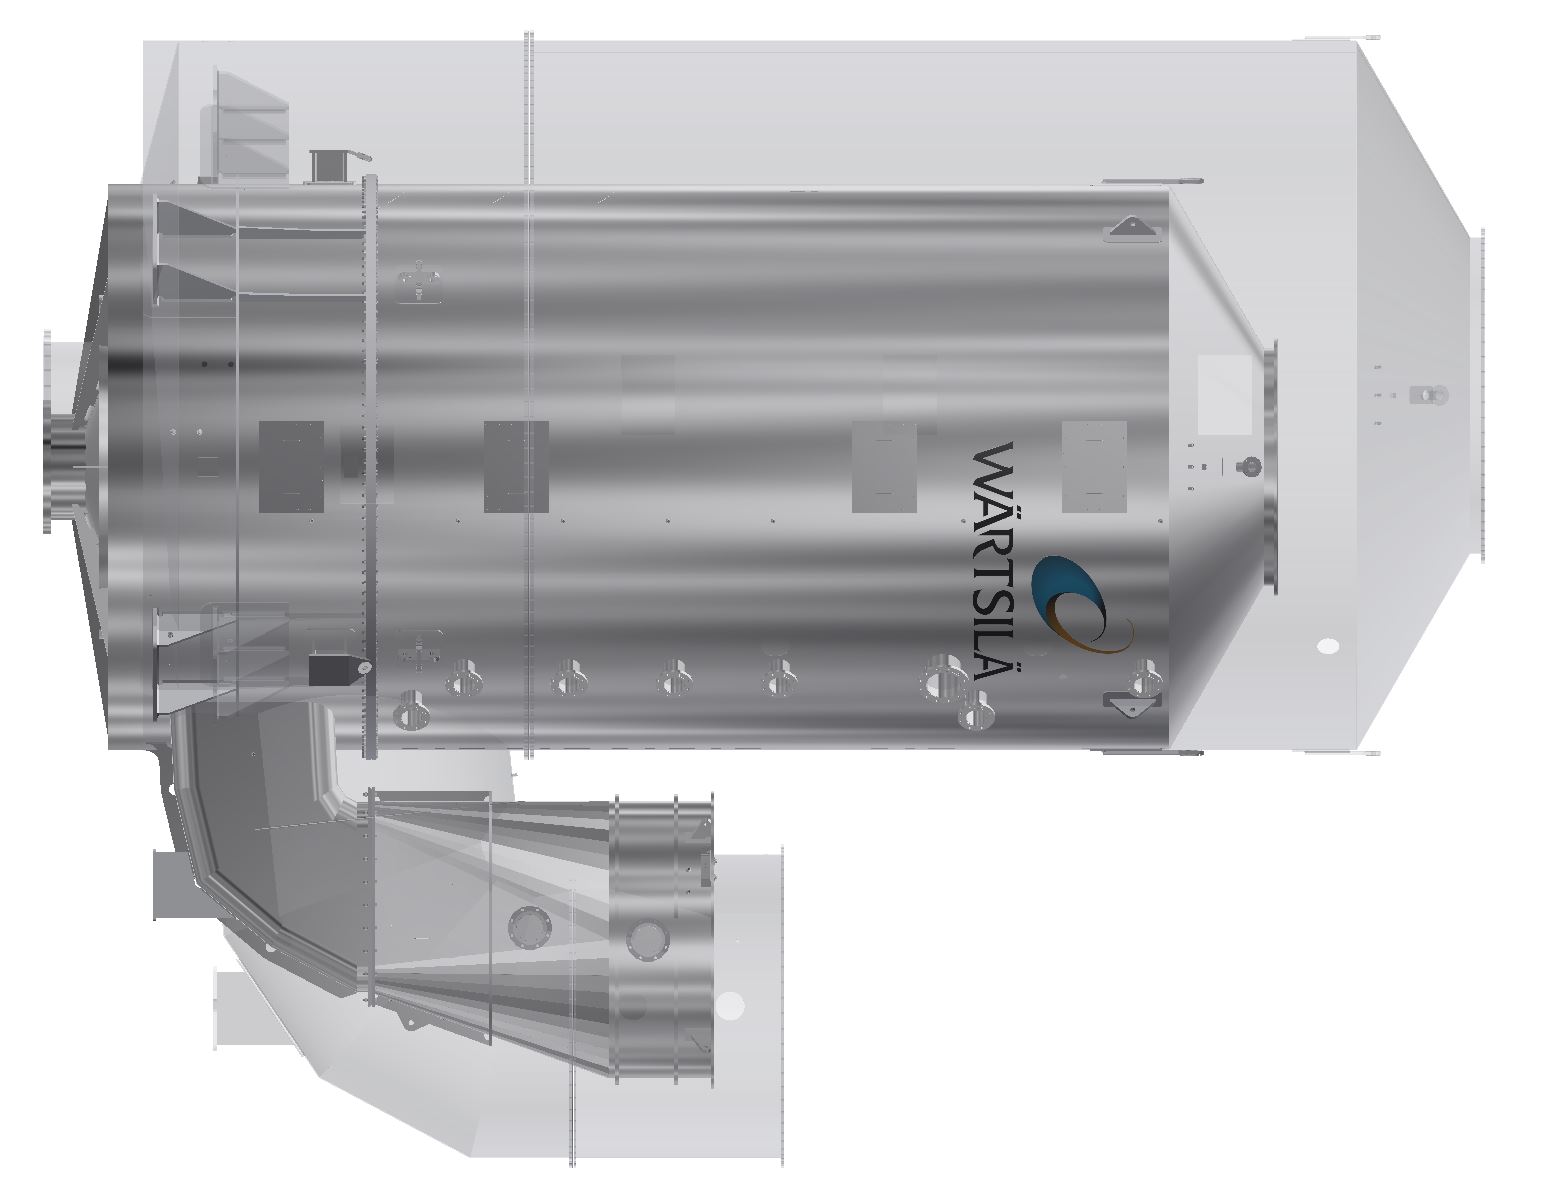 Wärtsilä launches new lighter, smaller IQ Series scrubber – the next step forward in exhaust gas treatment design